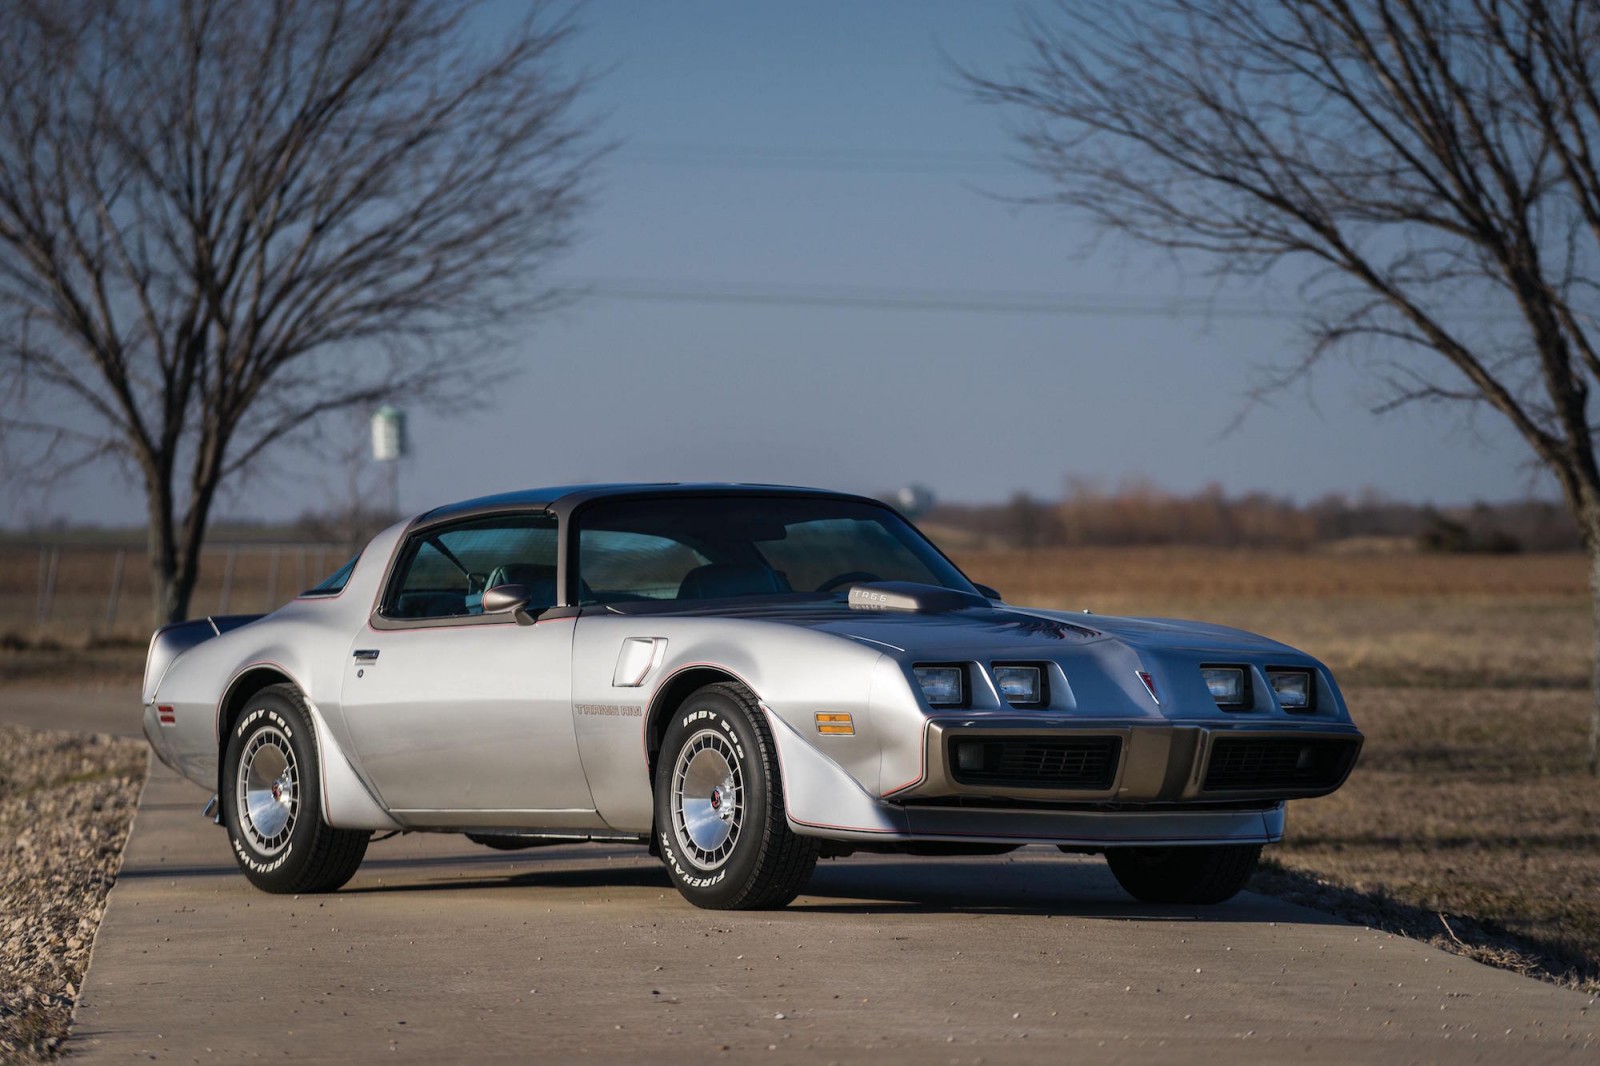 Be Cool, Buy This 1979 Pontiac Firebird Trans AM 10th Anniversary Edition